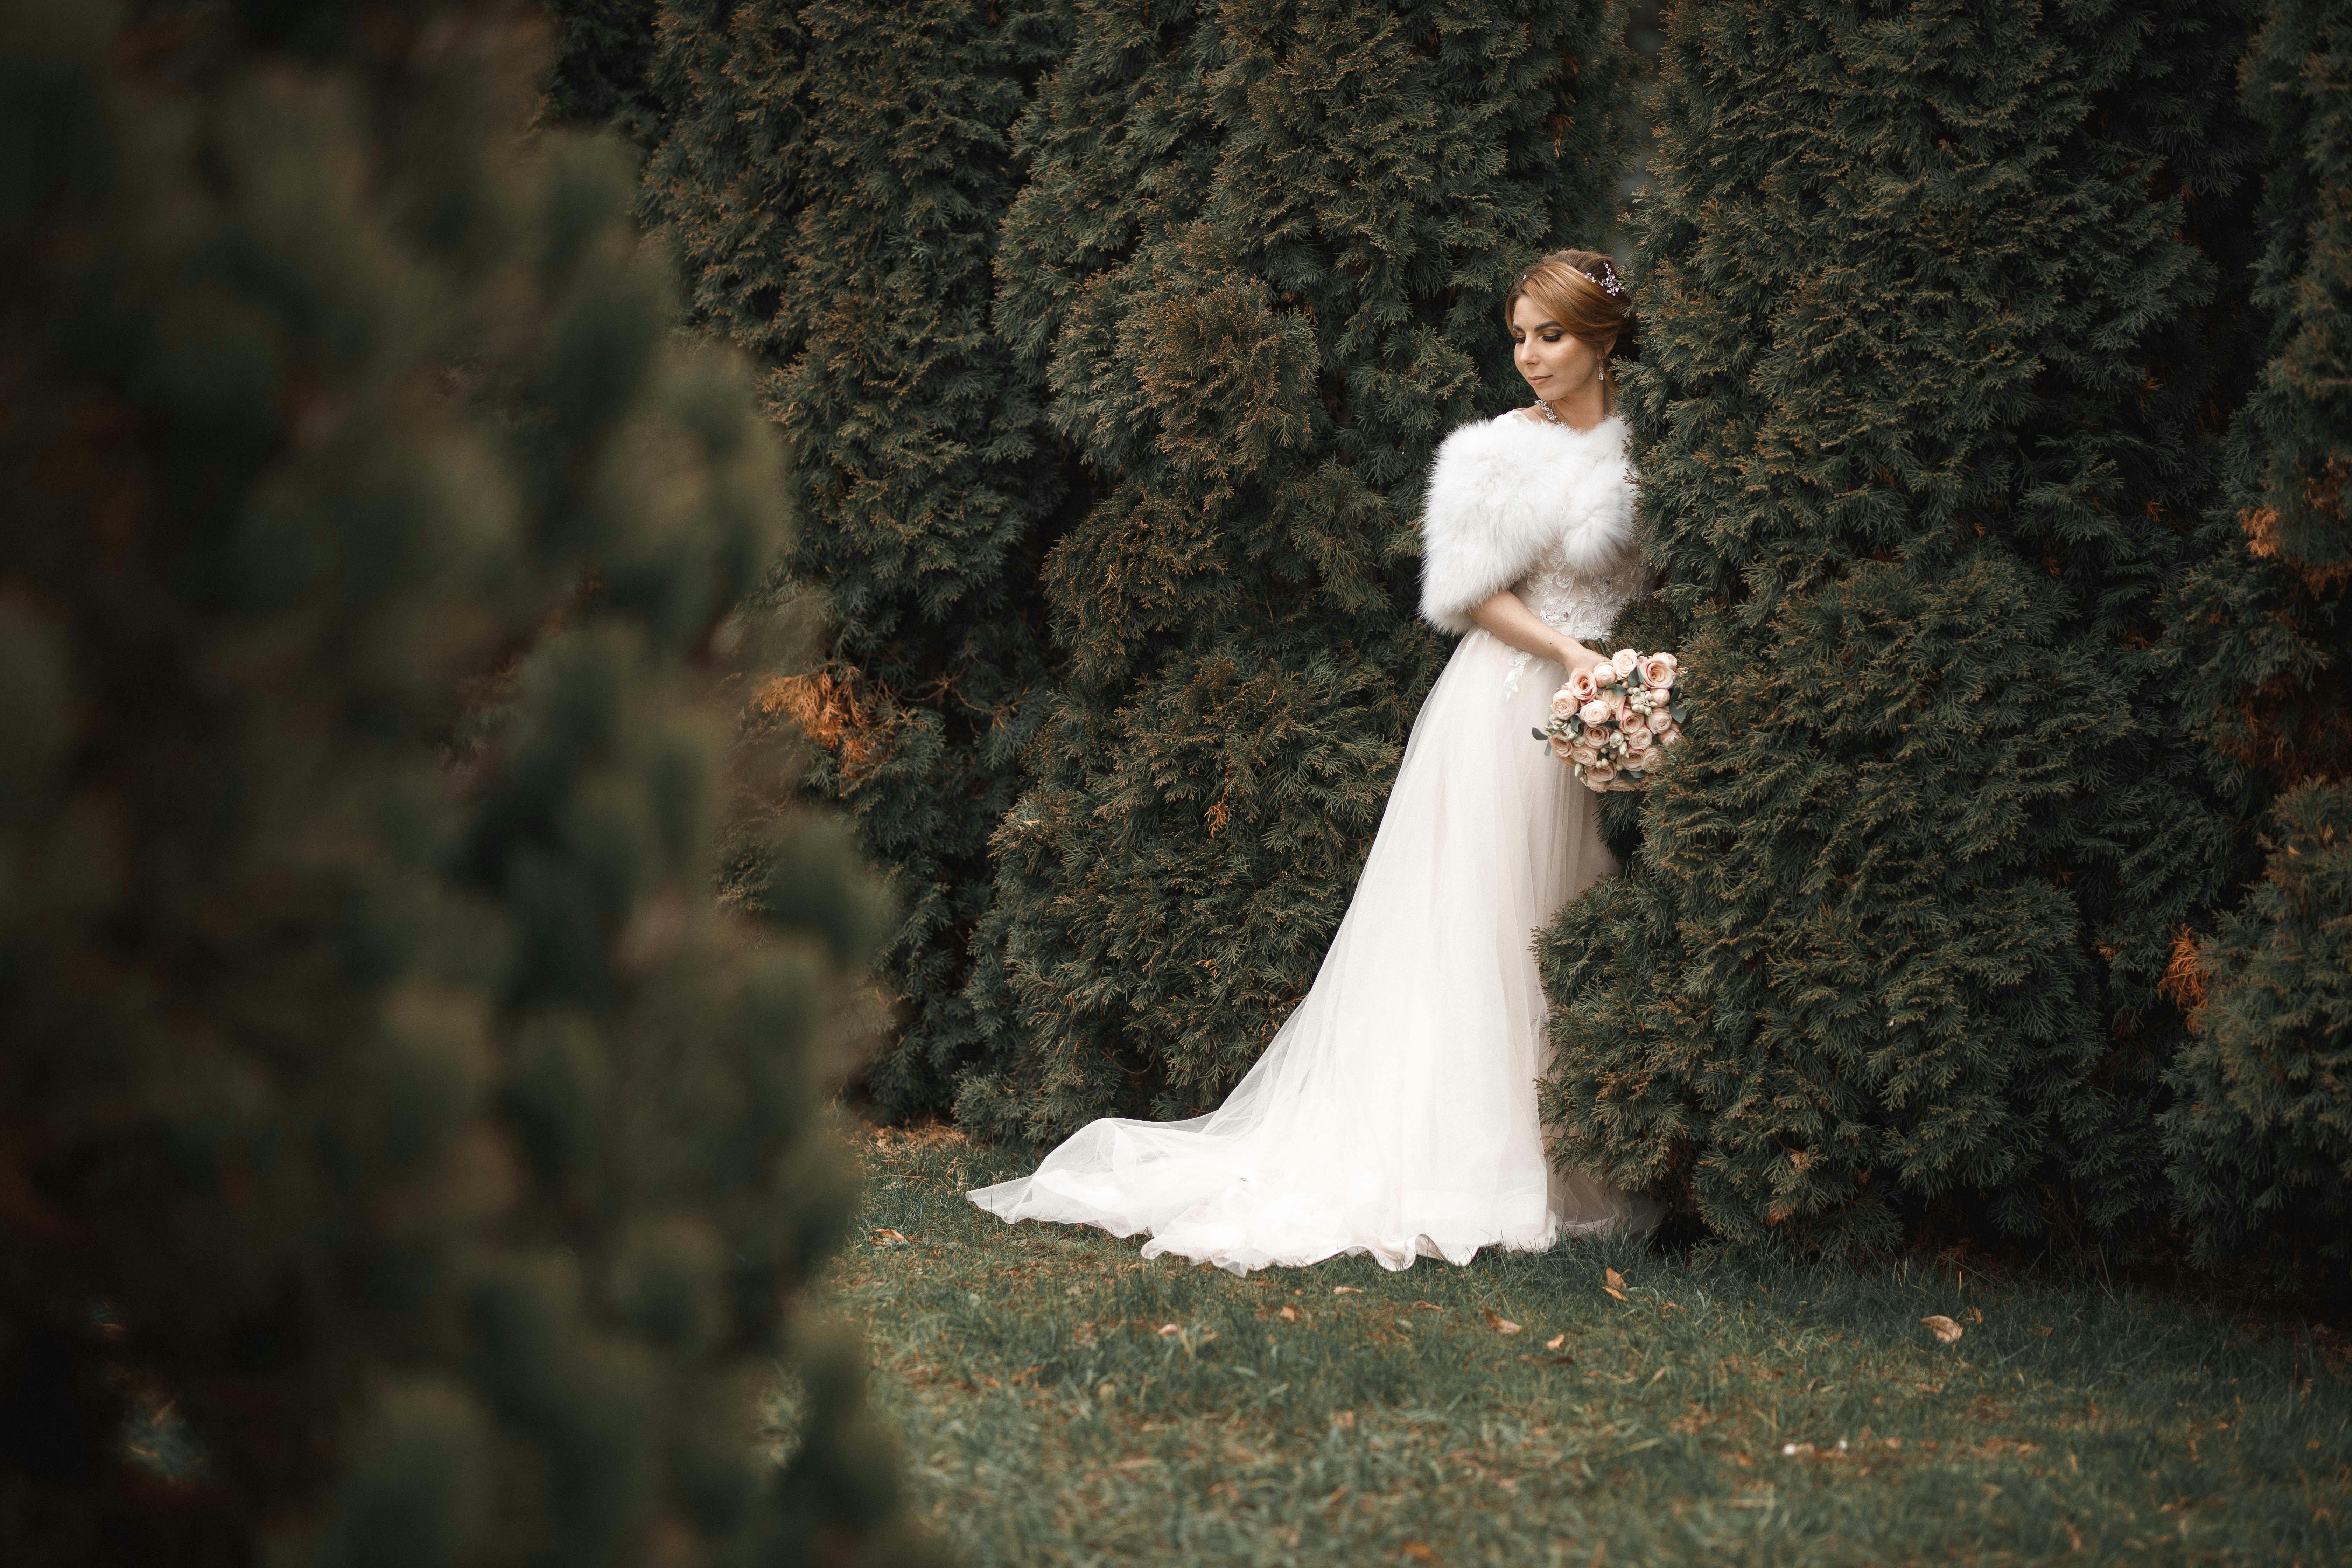 Bride in Wedding Dress in Garden · Free Stock Photo